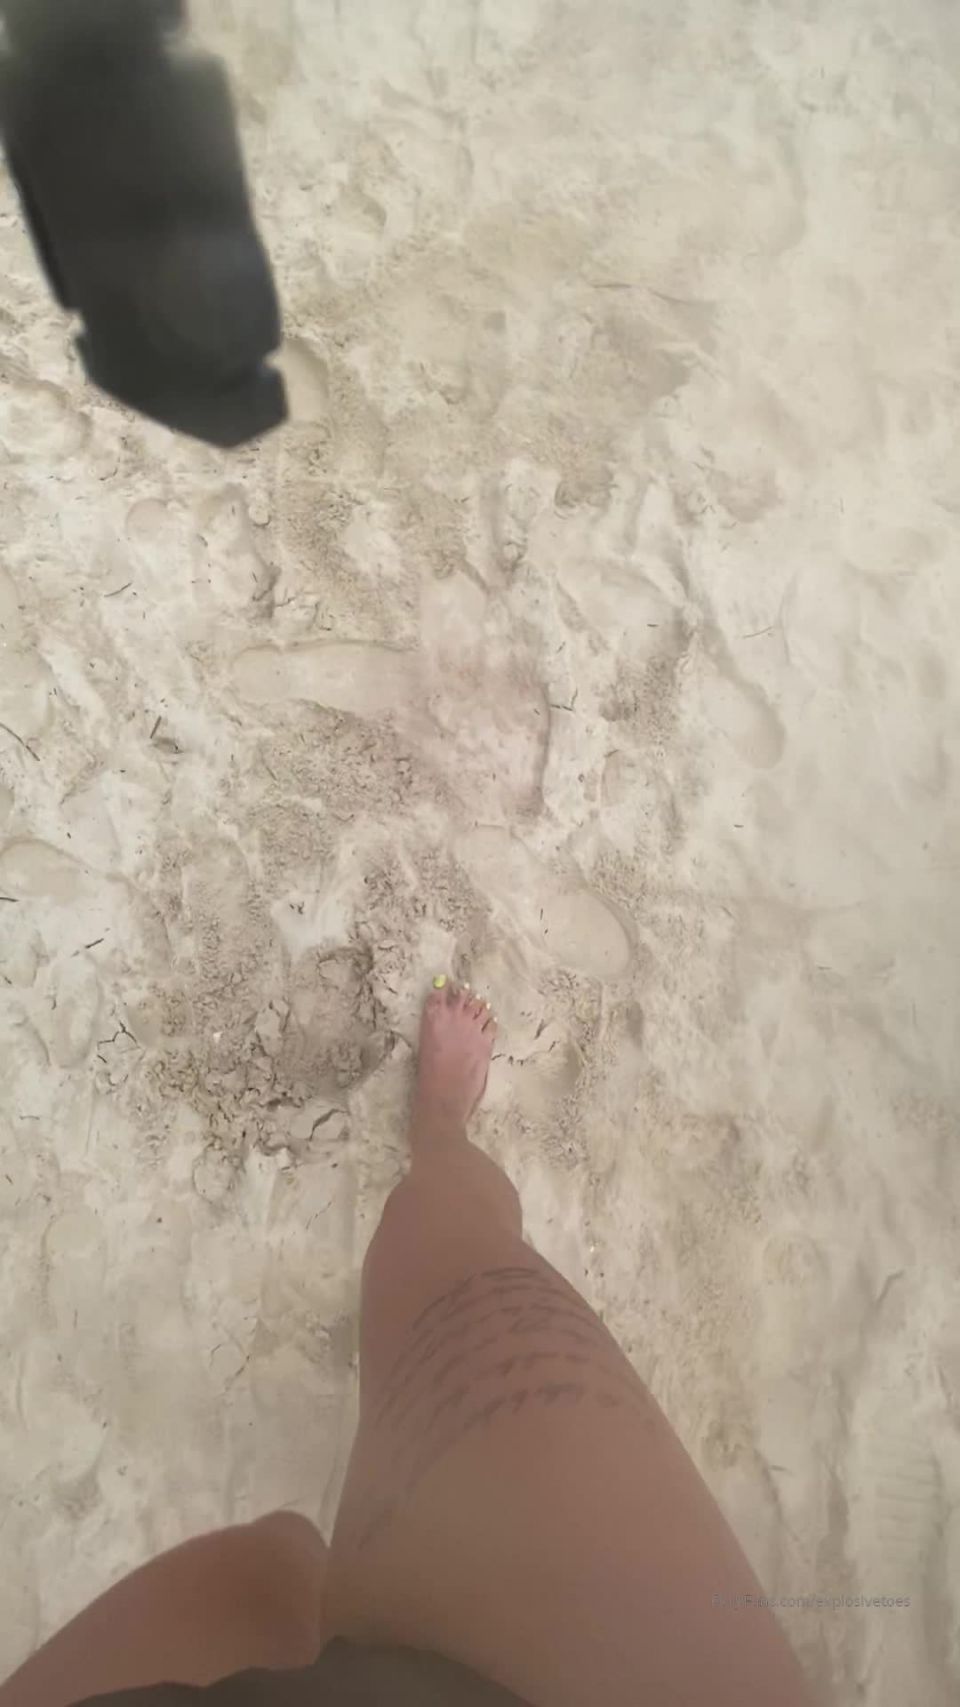 Explosivetoes () s - lick the sand off my feet boys 27-10-2019